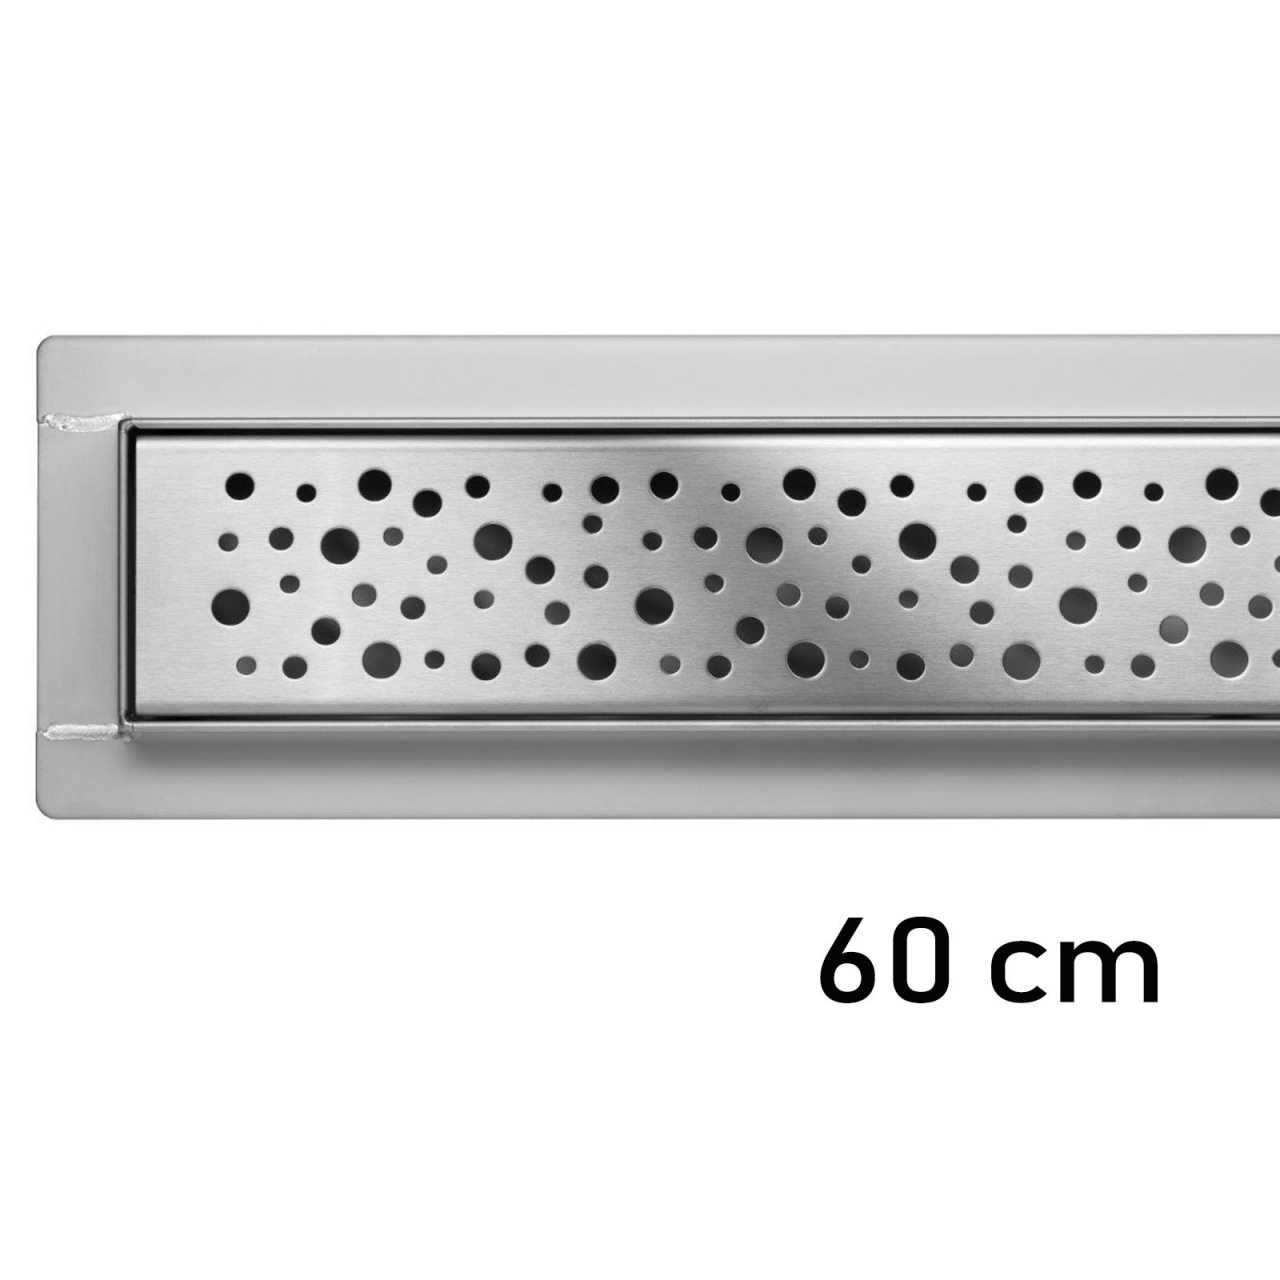 Fala Duschrinne Napo 60cm (70mm breit) 75377